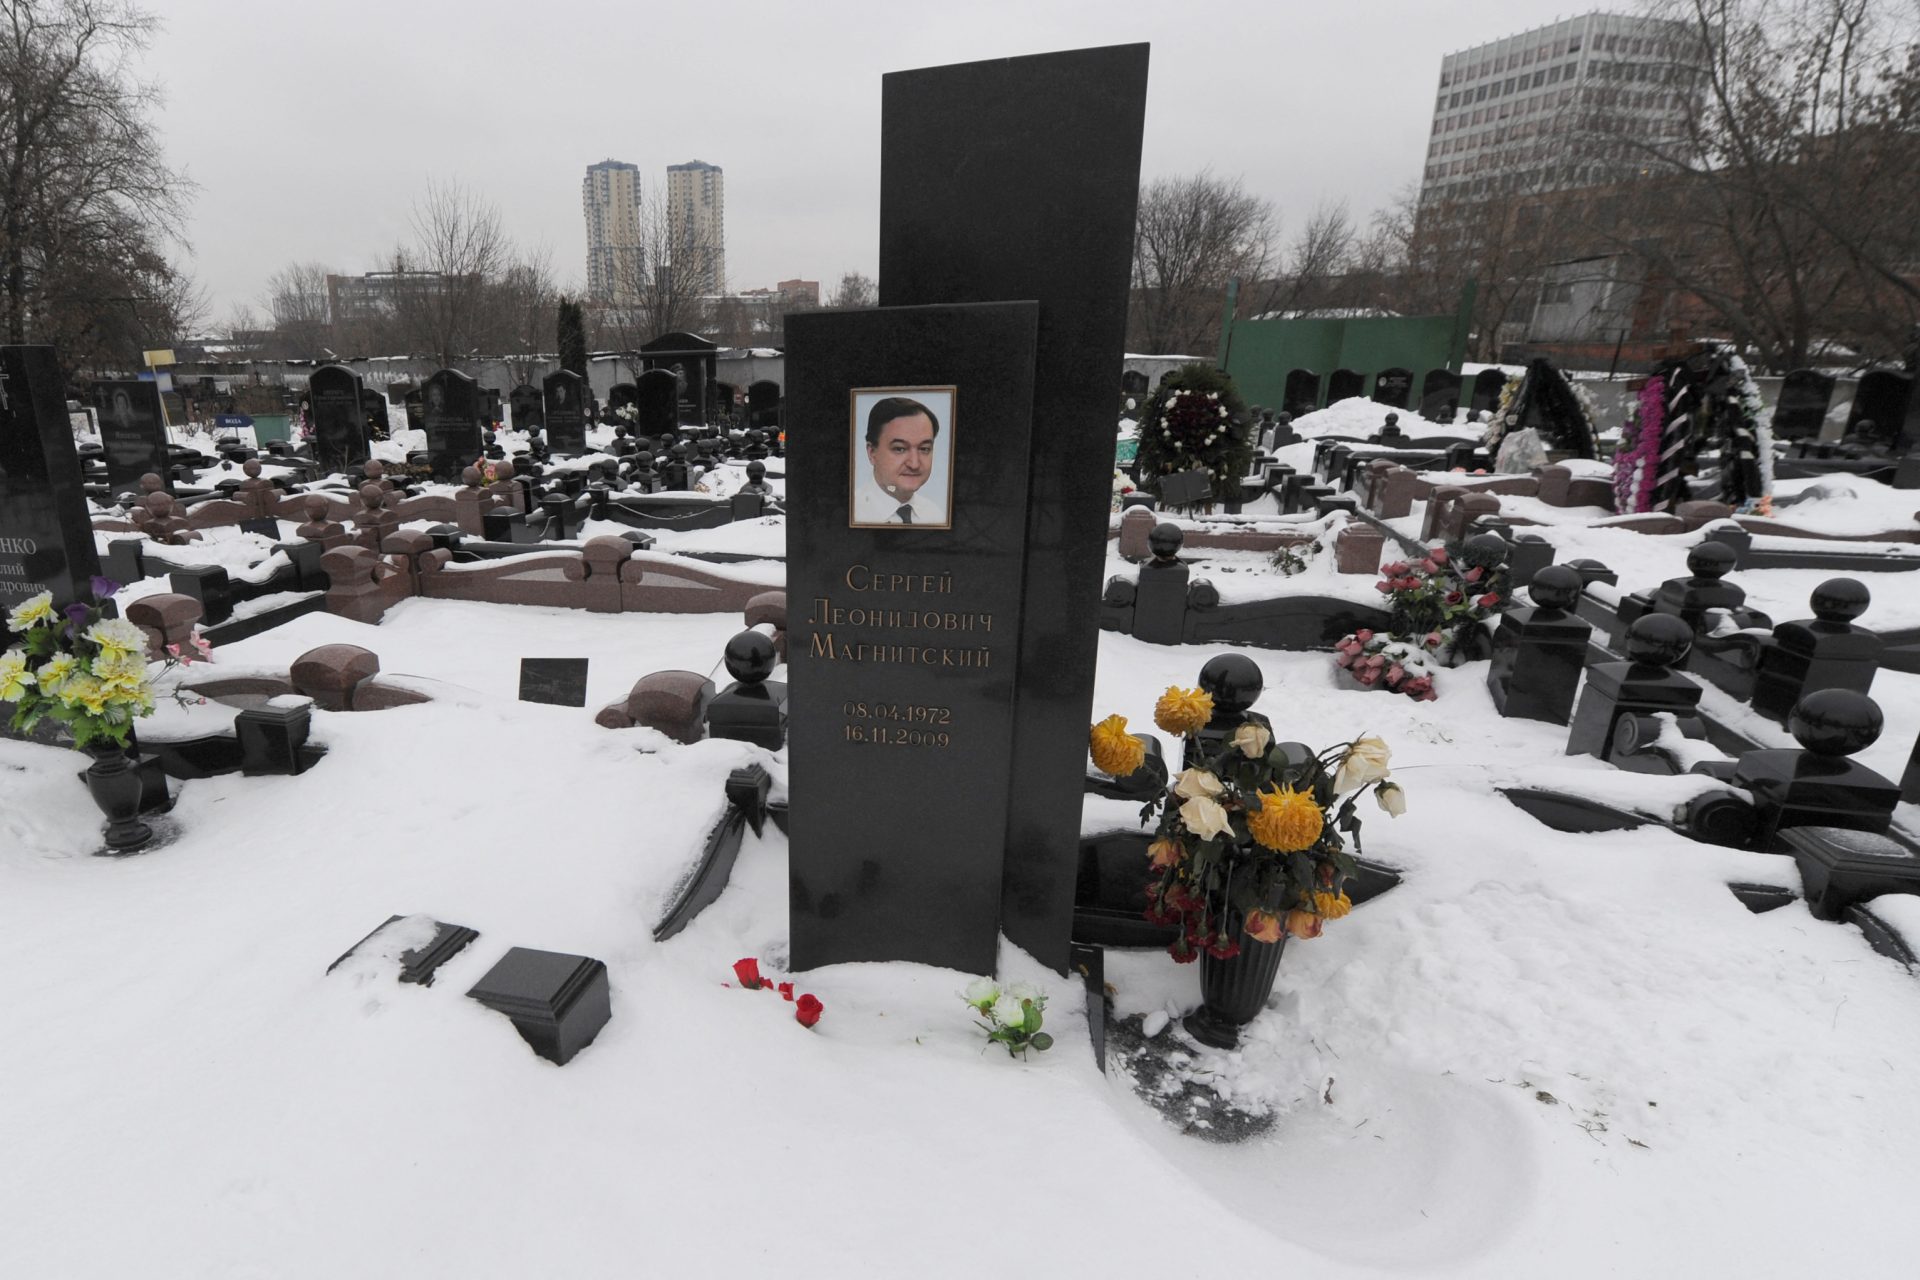 The death of Sergei Magnitsky